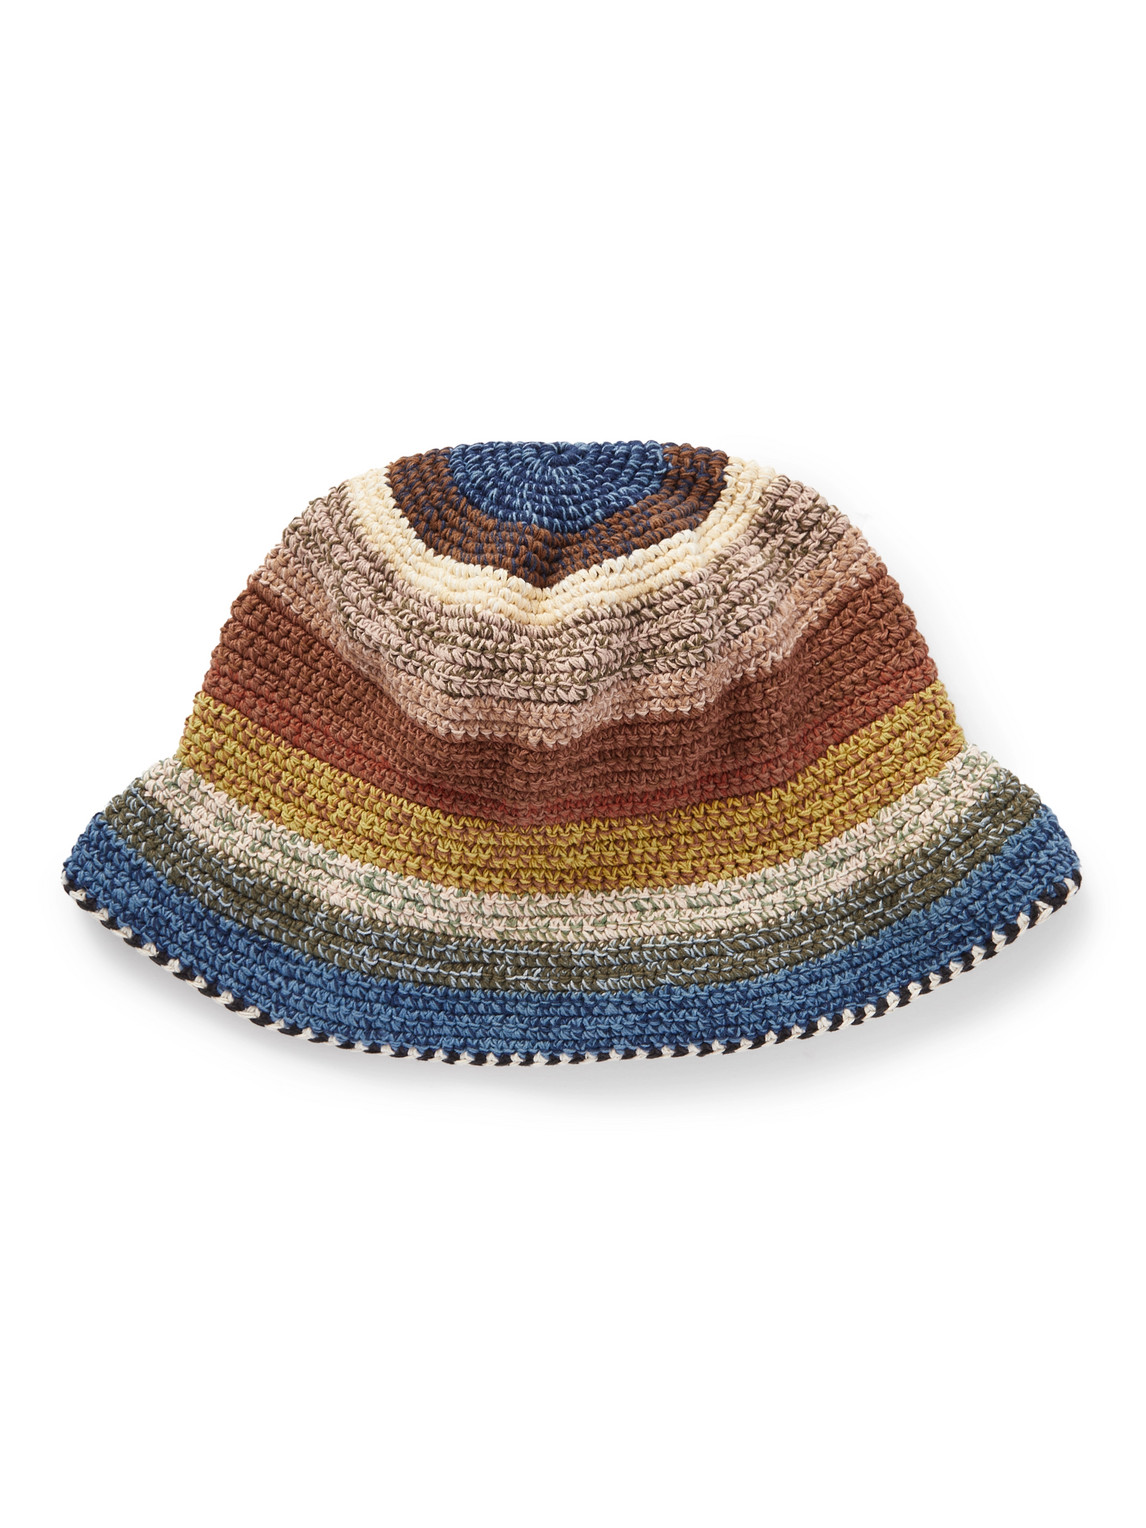 Story Mfg. - Brew Striped Crocheted Organic Cotton Bucket Hat - Men - Multi von Story Mfg.